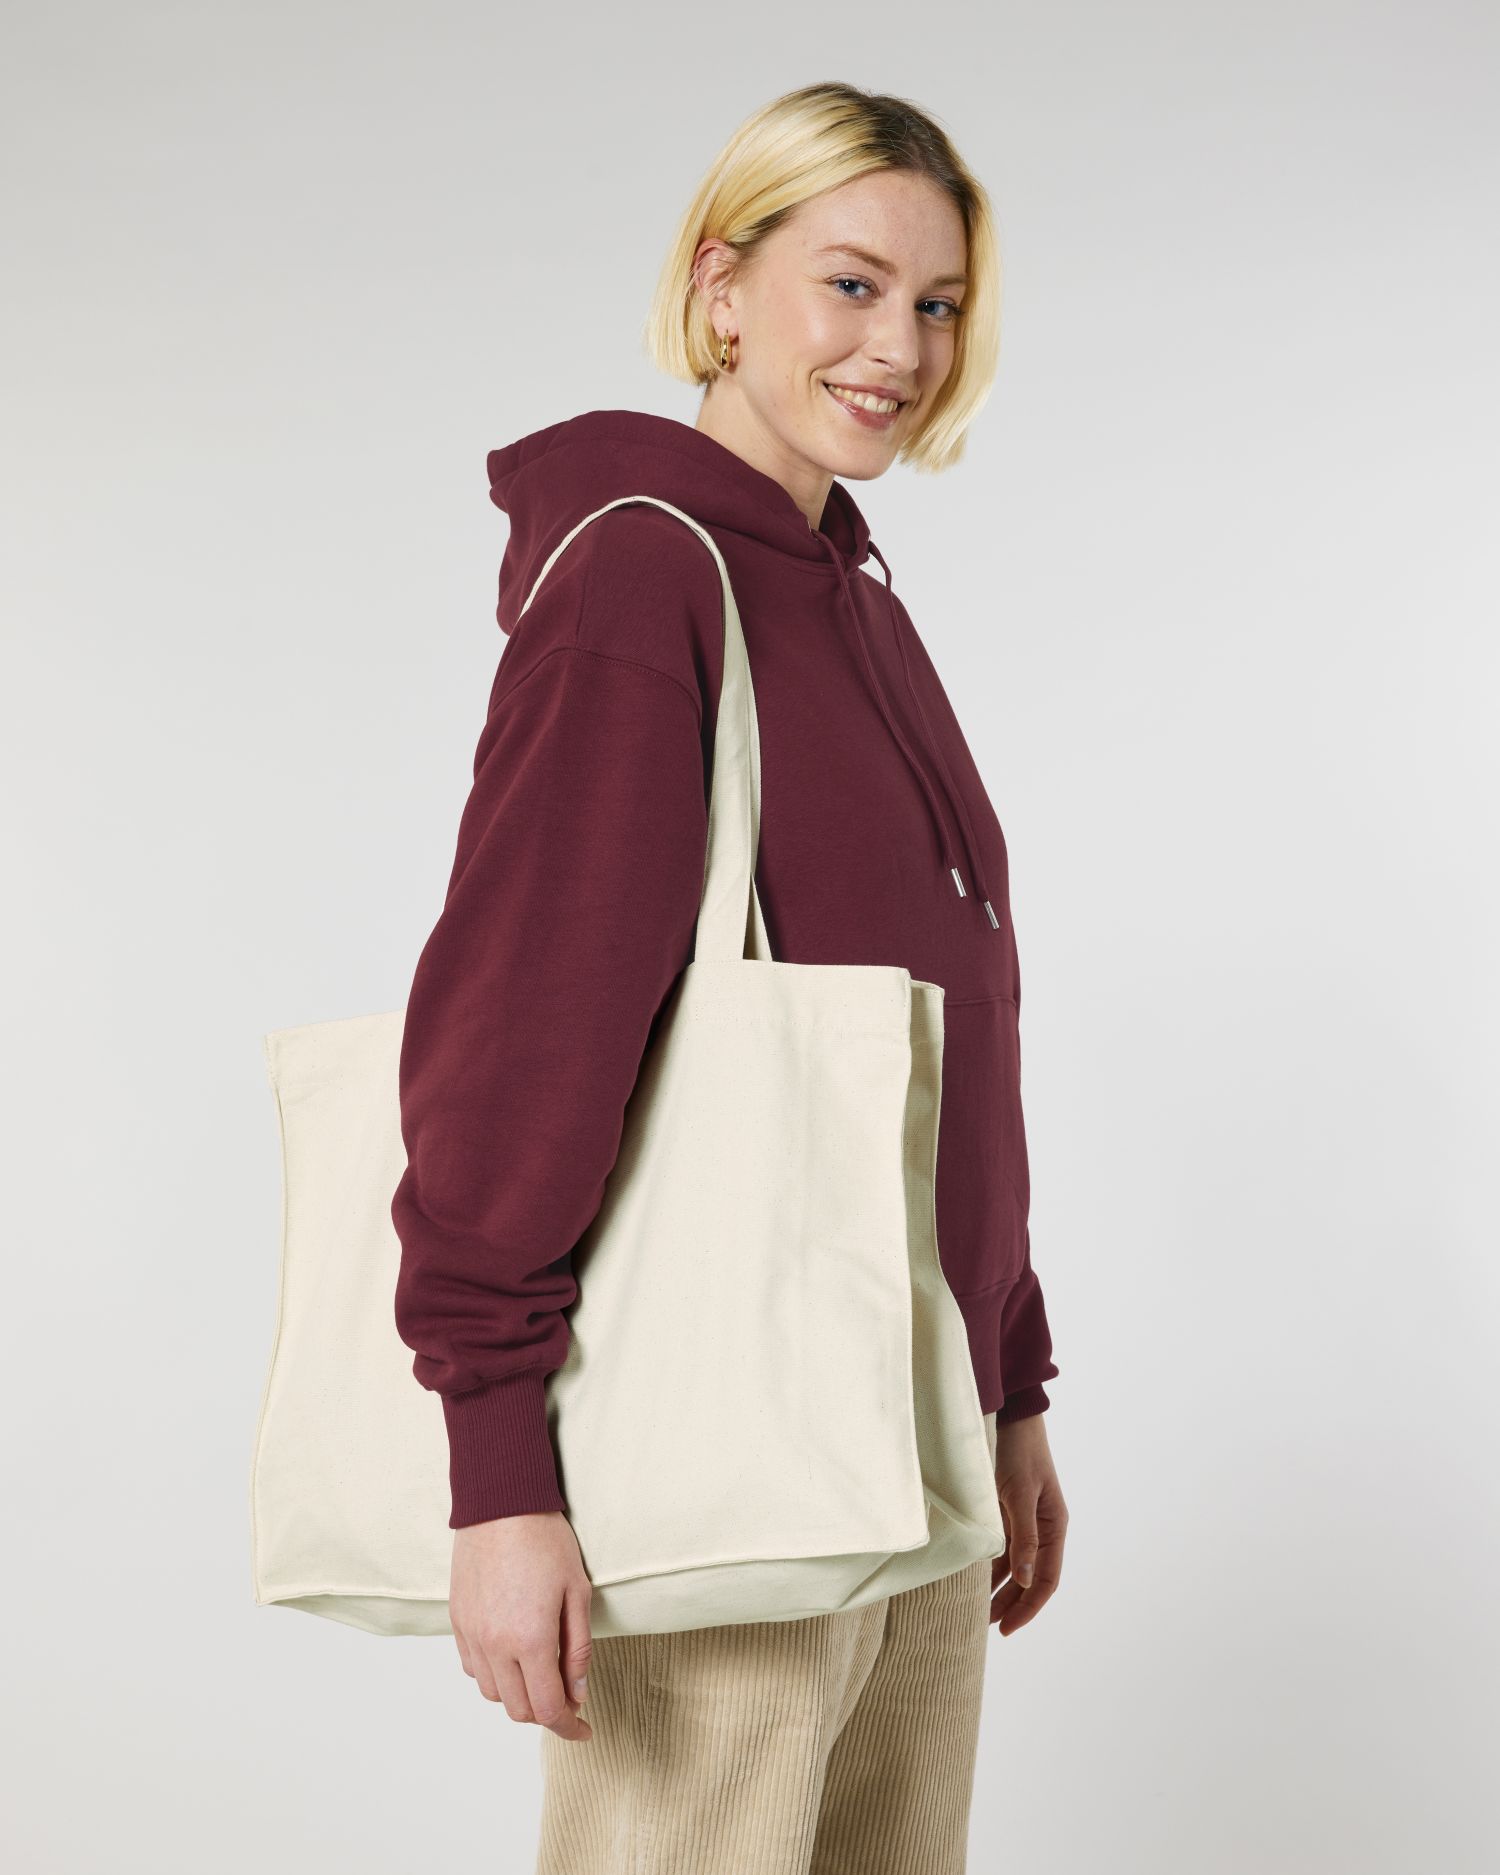 Stanley/Stella "Shopping Bag"